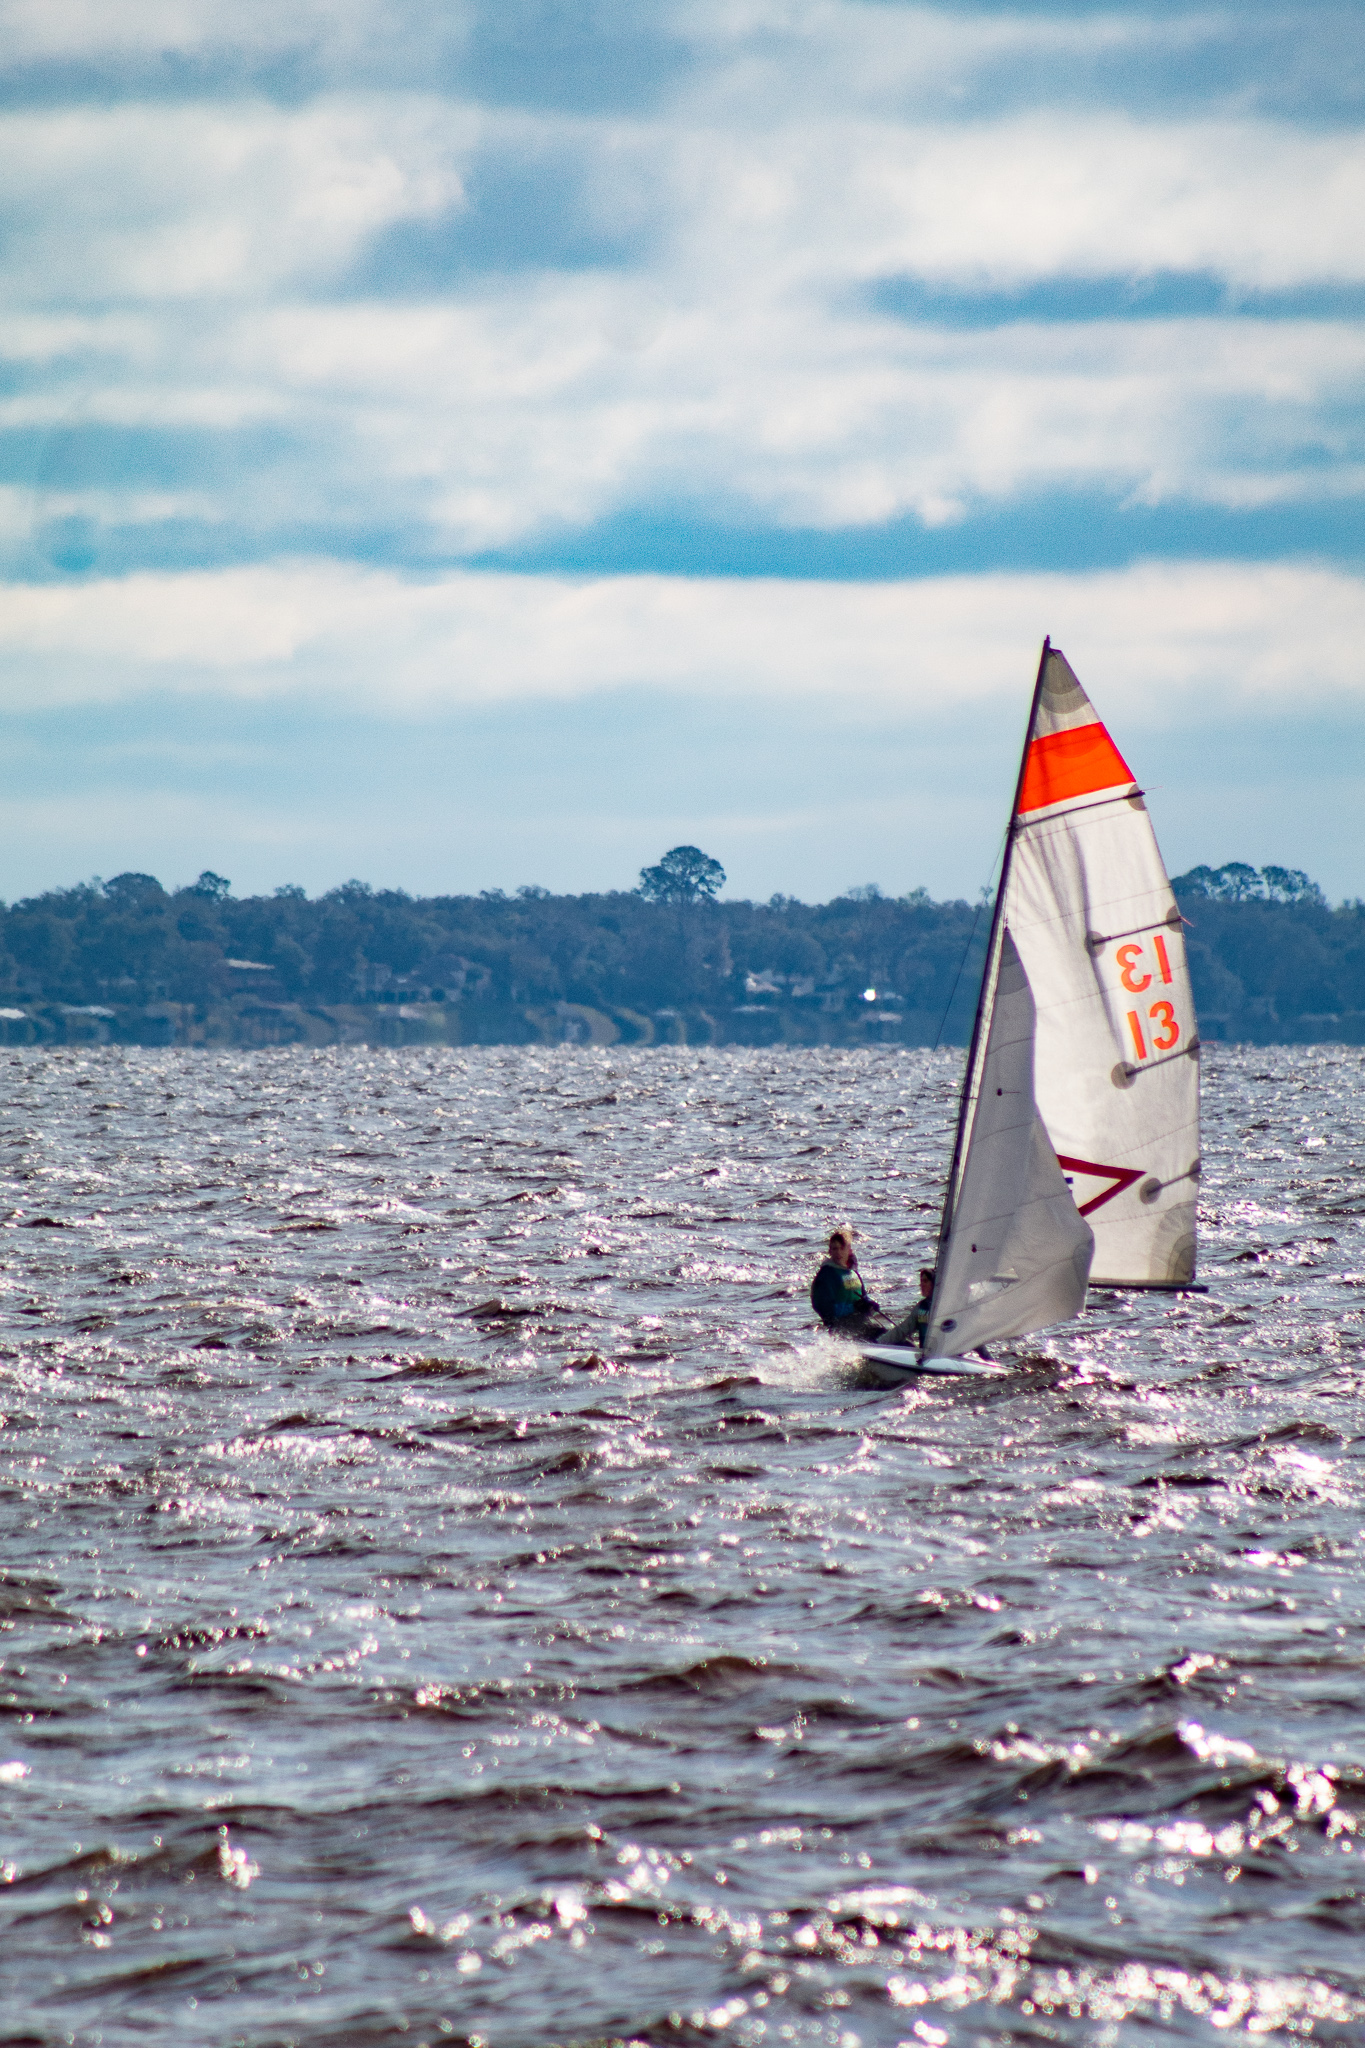 kid racing a sailboat in choppy waters